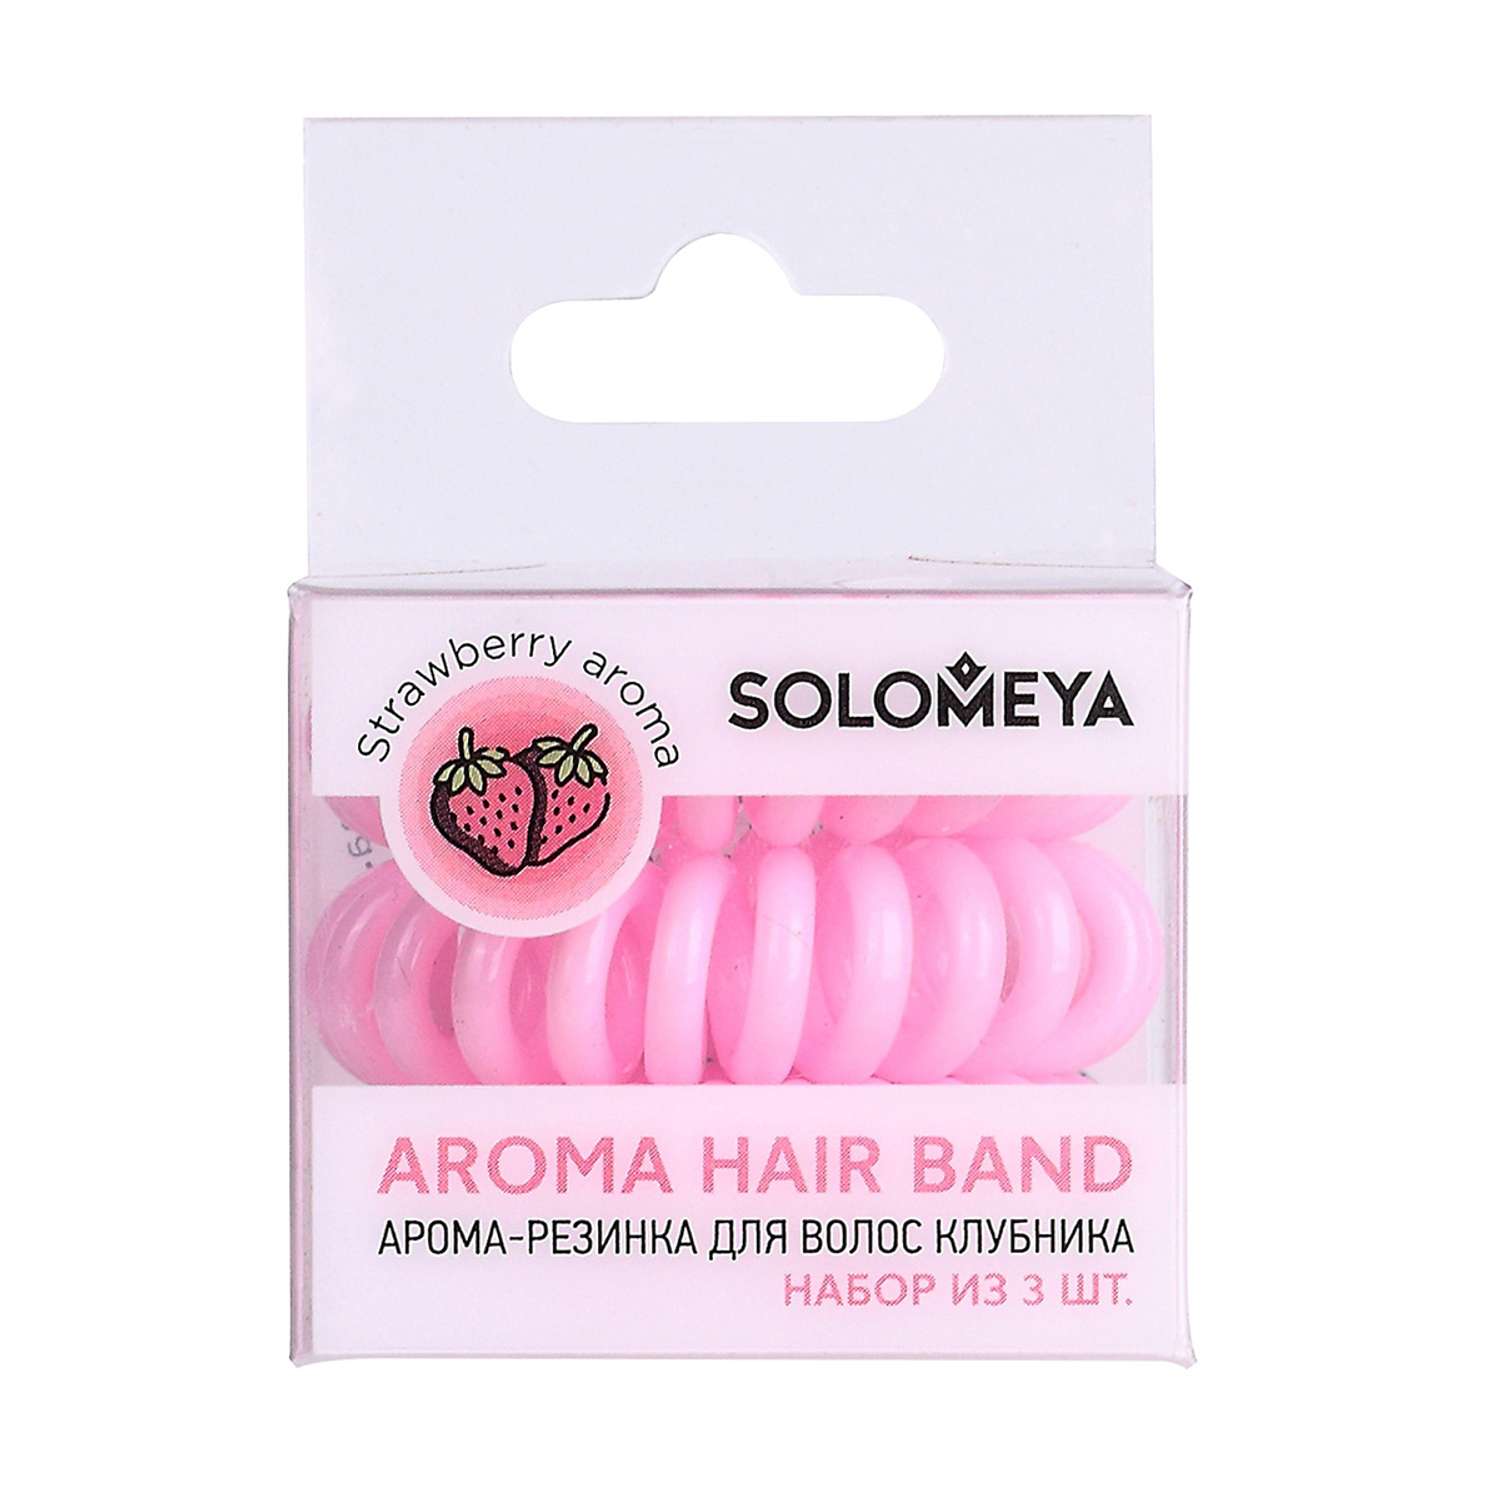 Арома-резинка для волос SOLOMEYA Клубника набор из 3 шт - фото 1